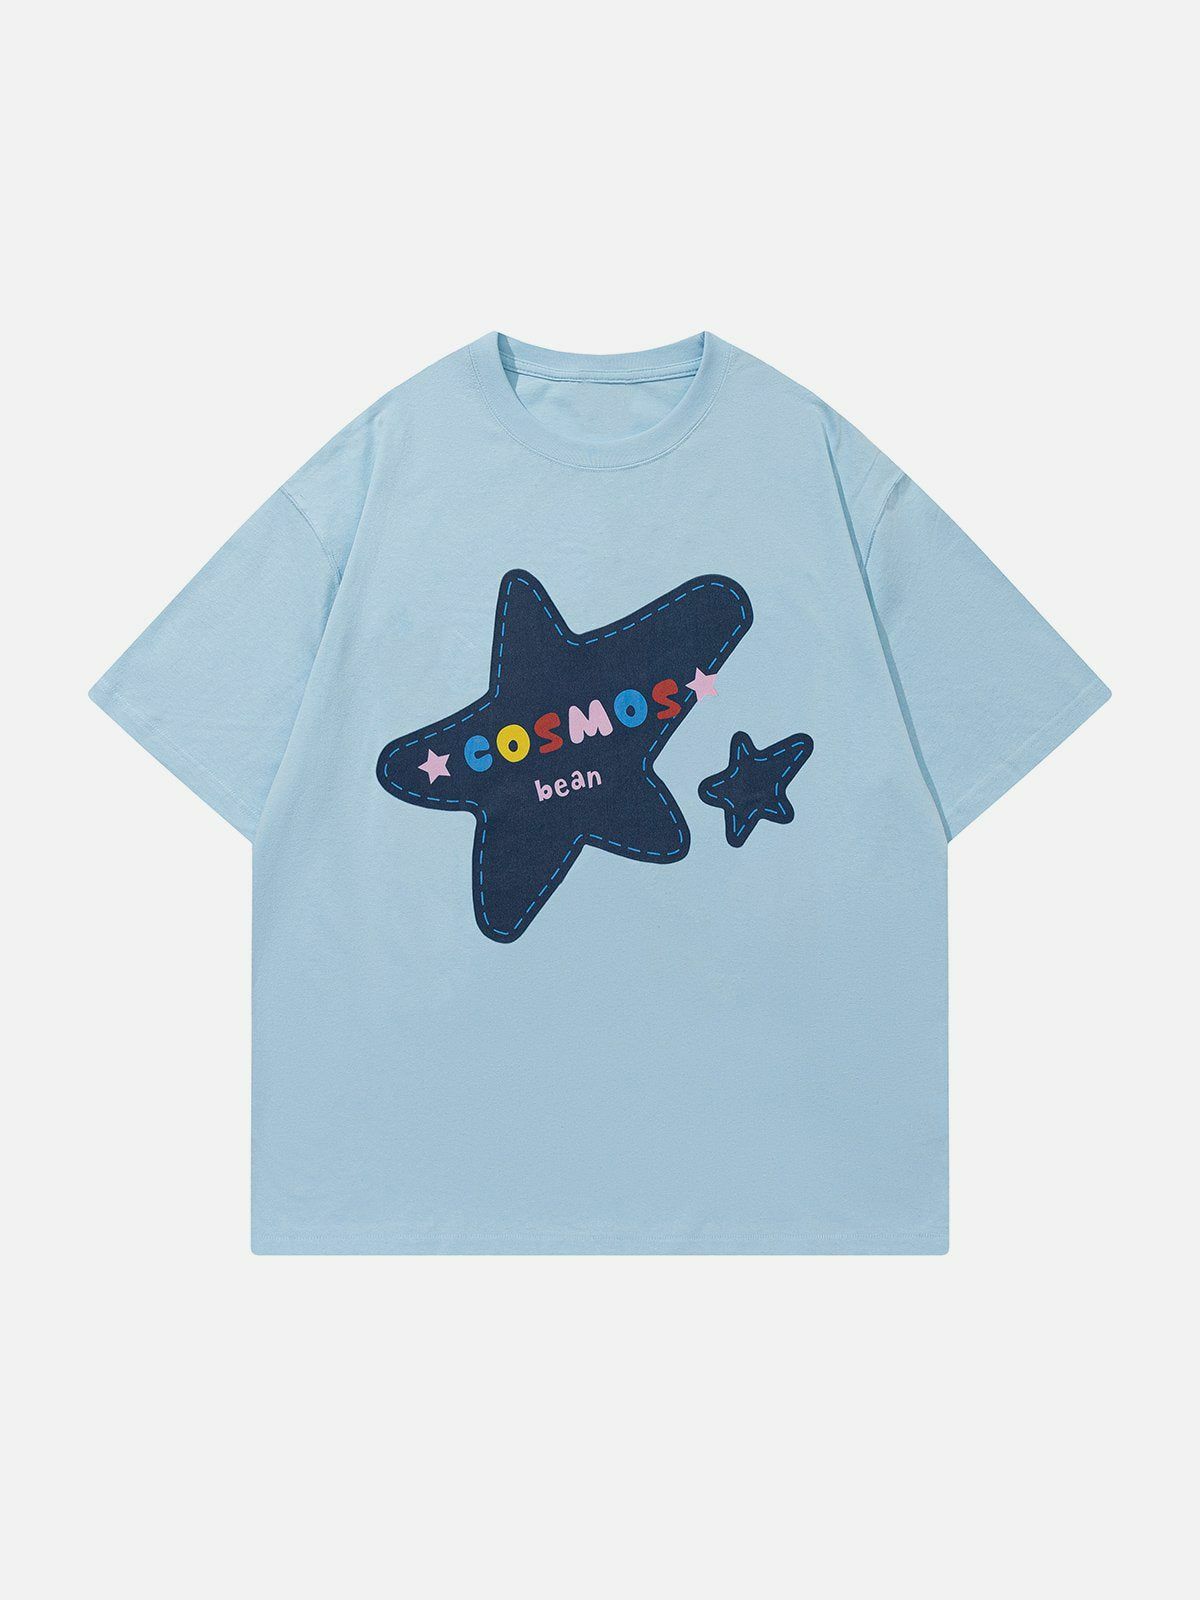 vibrant star print tee edgy  retro graphic shirt 2885